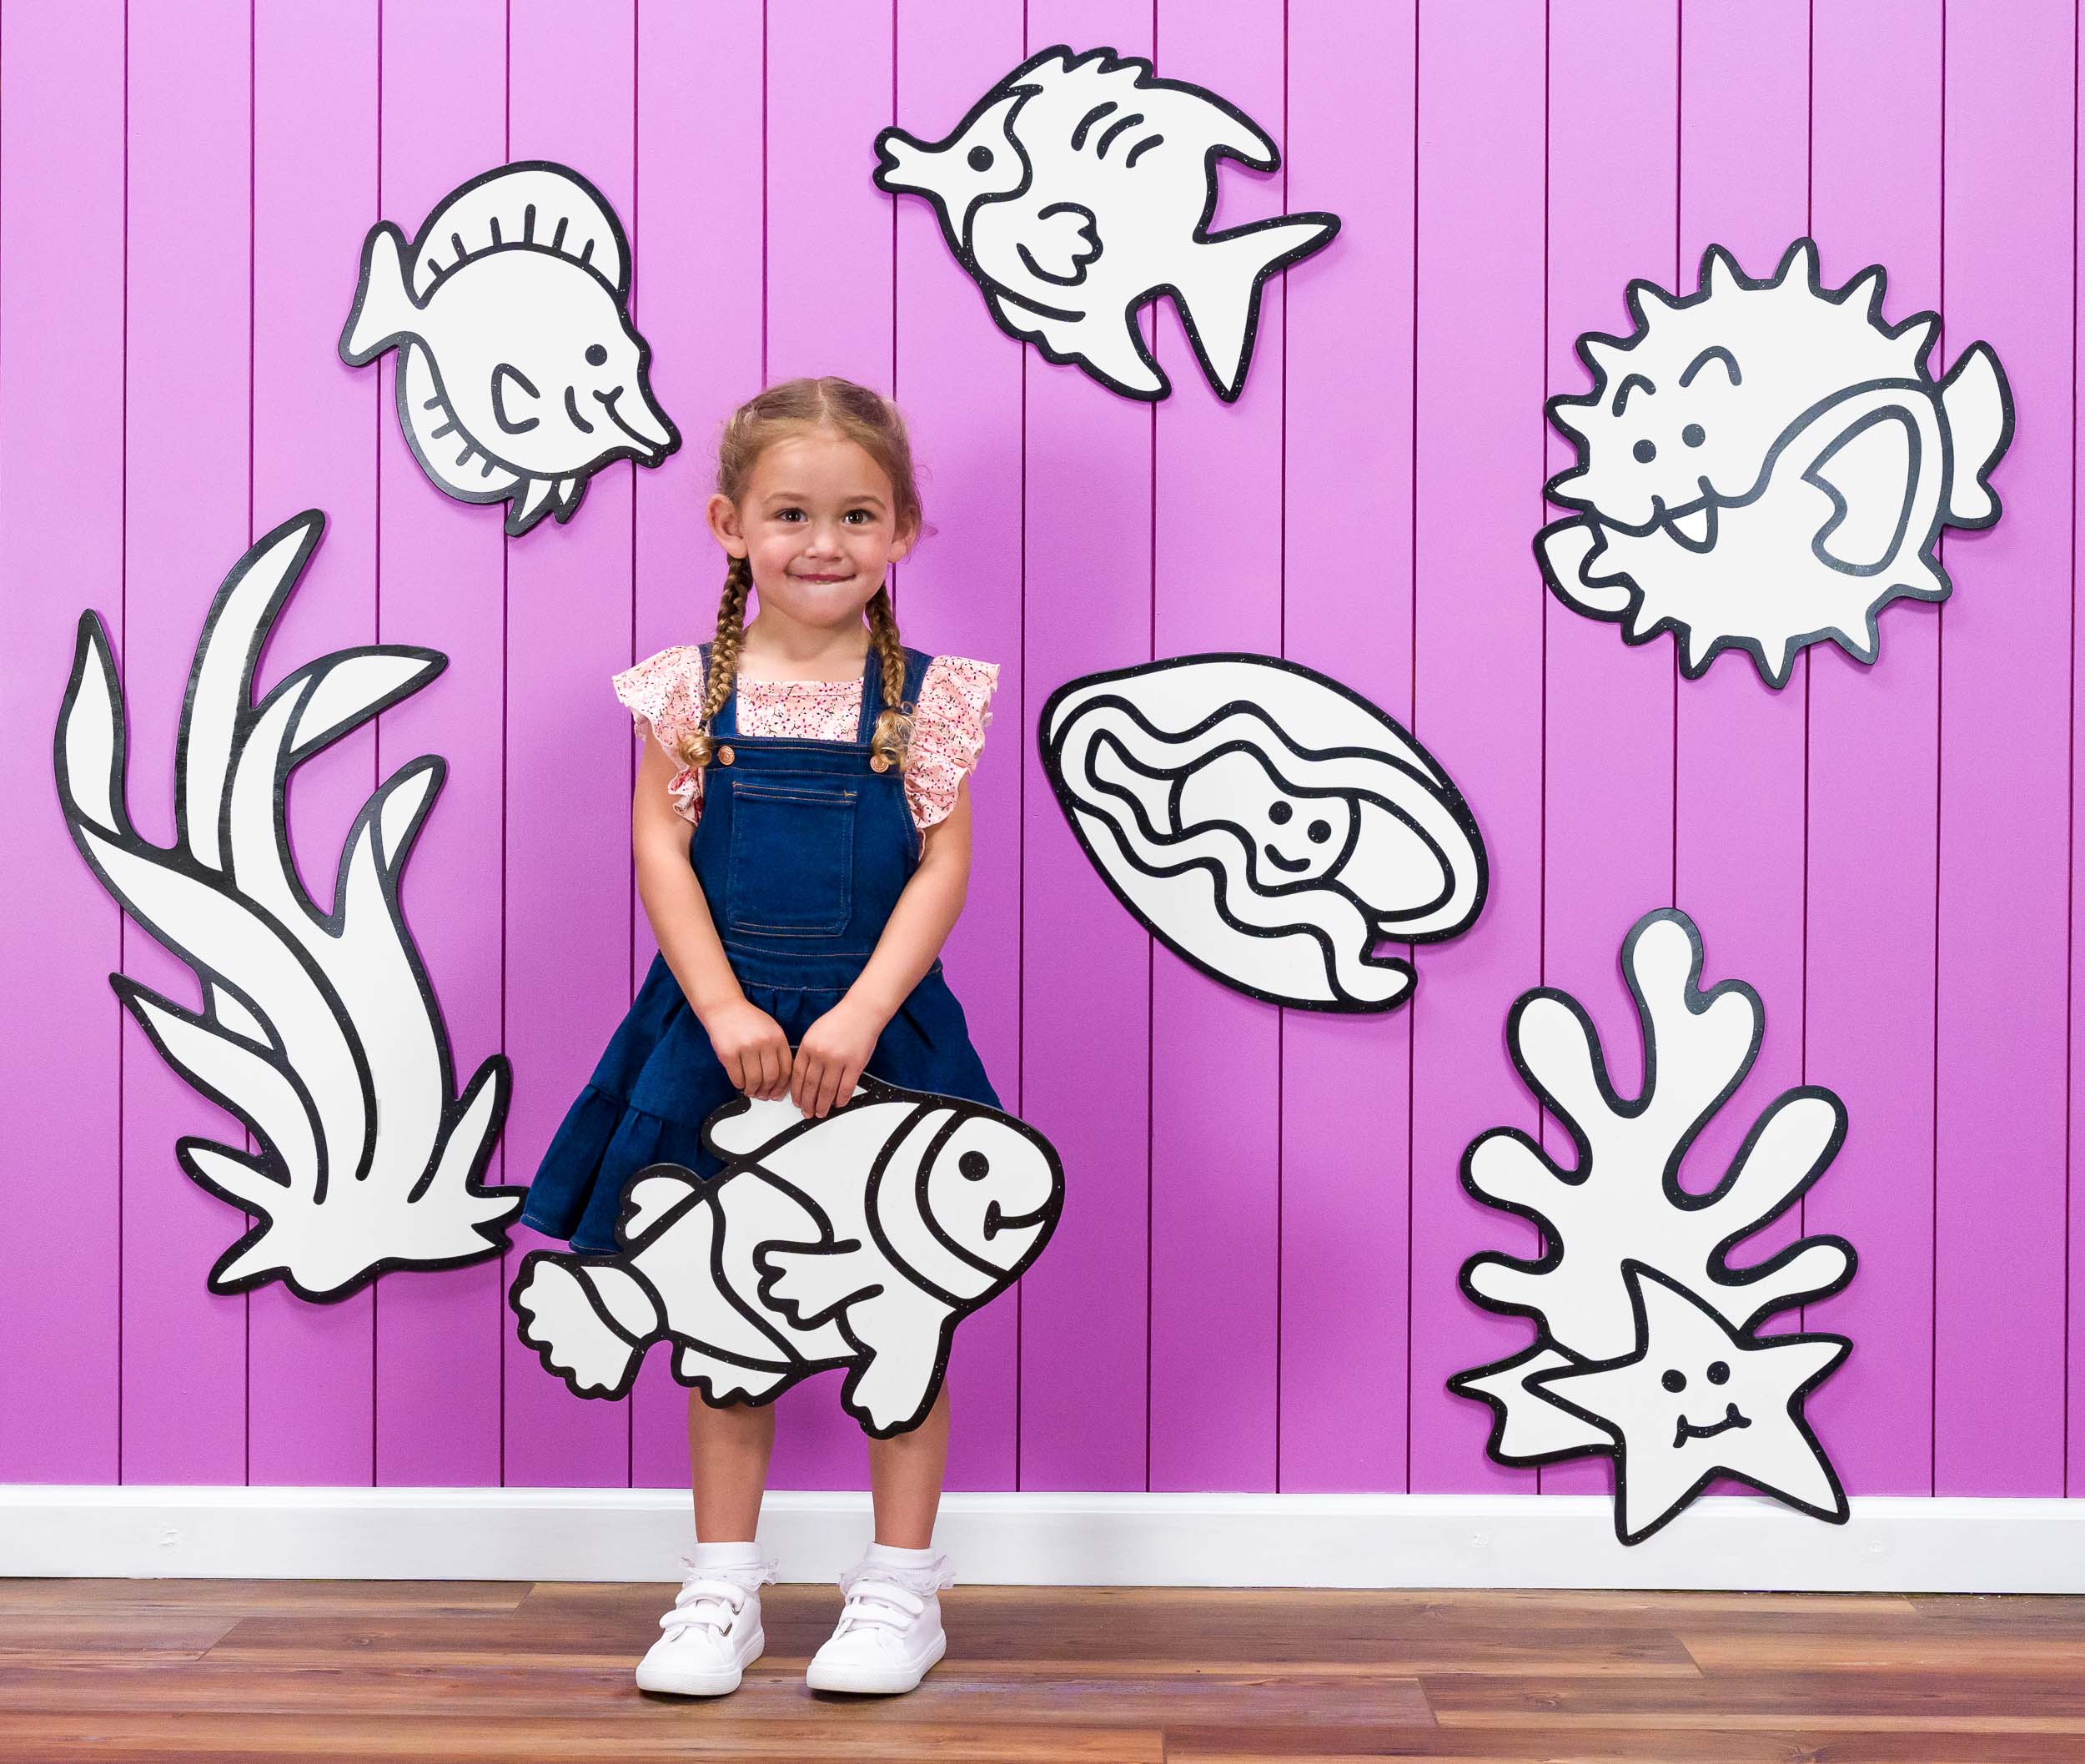 Aquarium nursery theme for boy or girl